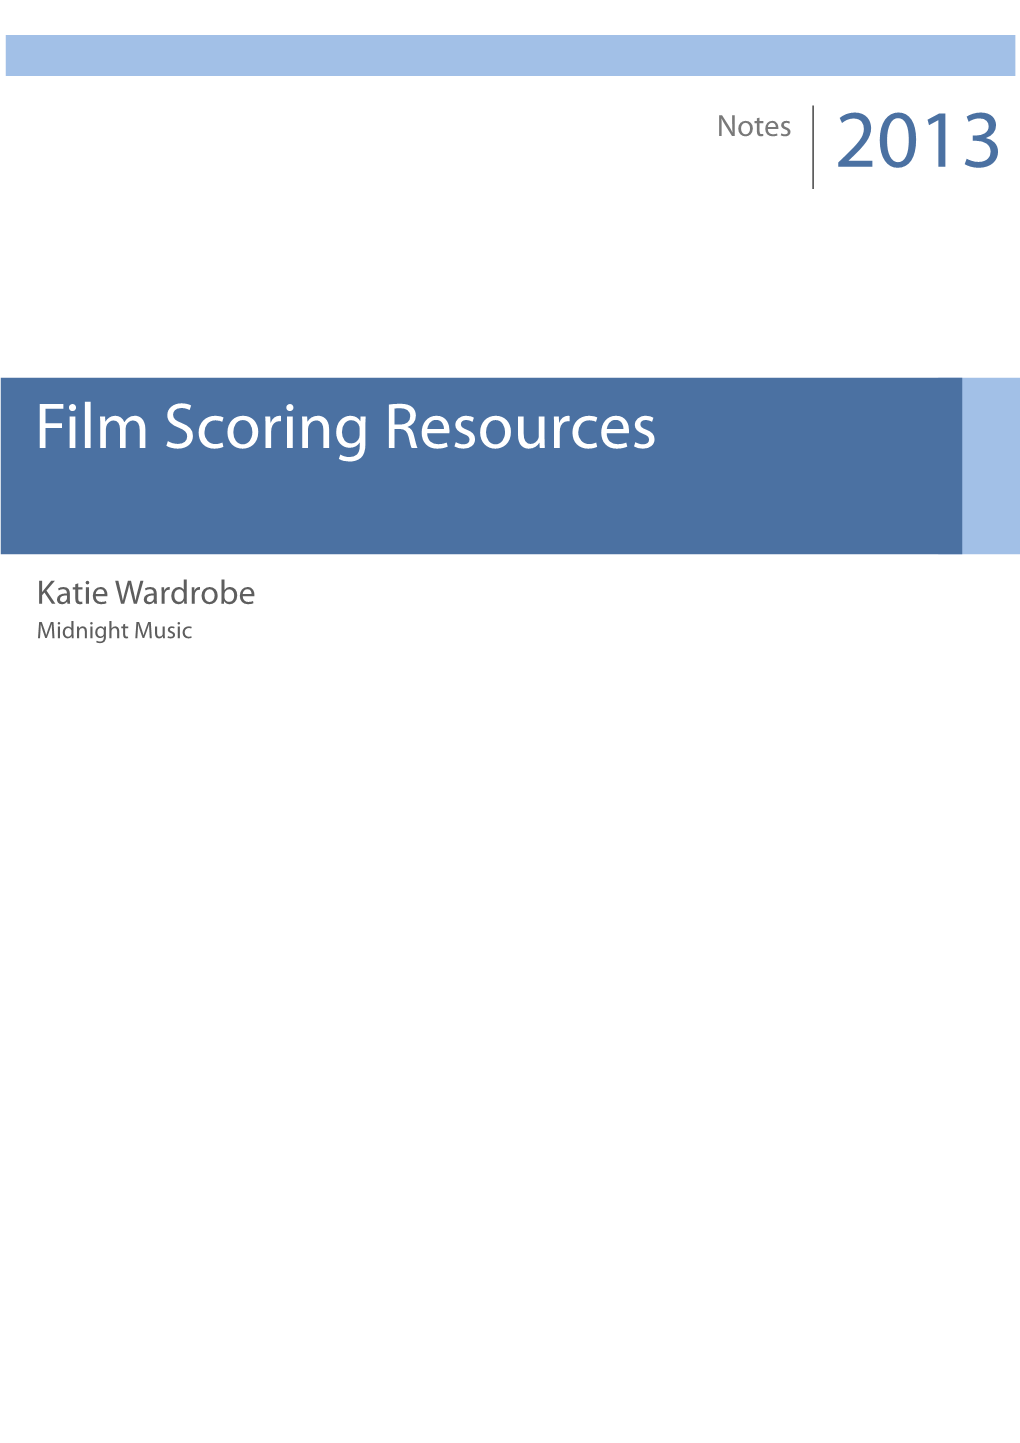 Film Scoring Resources